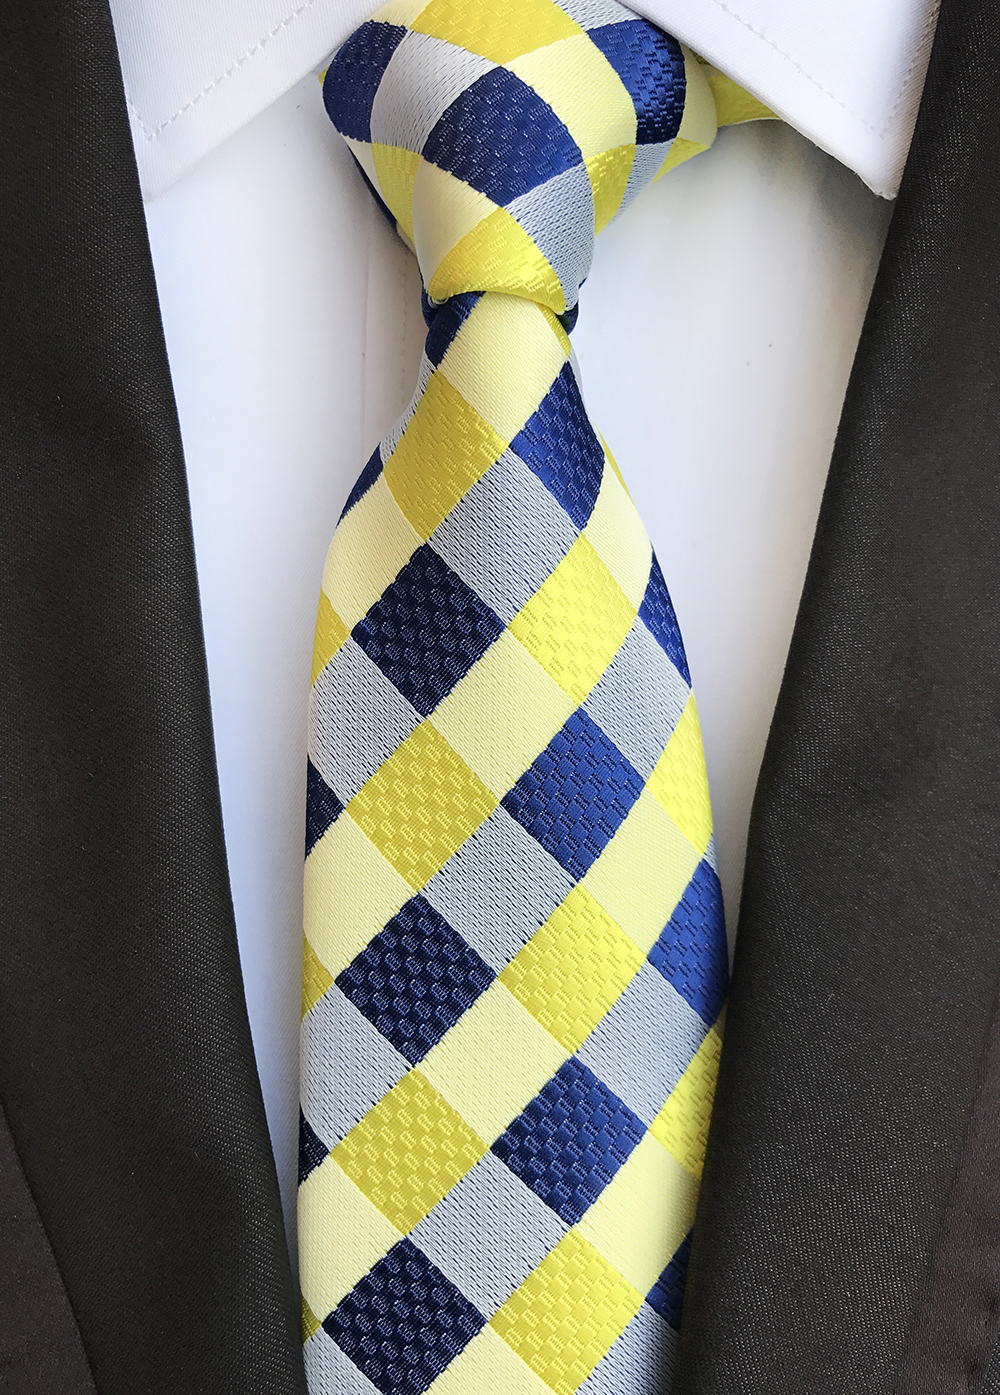 YISHLINE Classic 8cm Ties for Man 100% Silk Tie Luxury Striped Plaid Checks Business Neck Tie Cravat Wedding Party Neckties